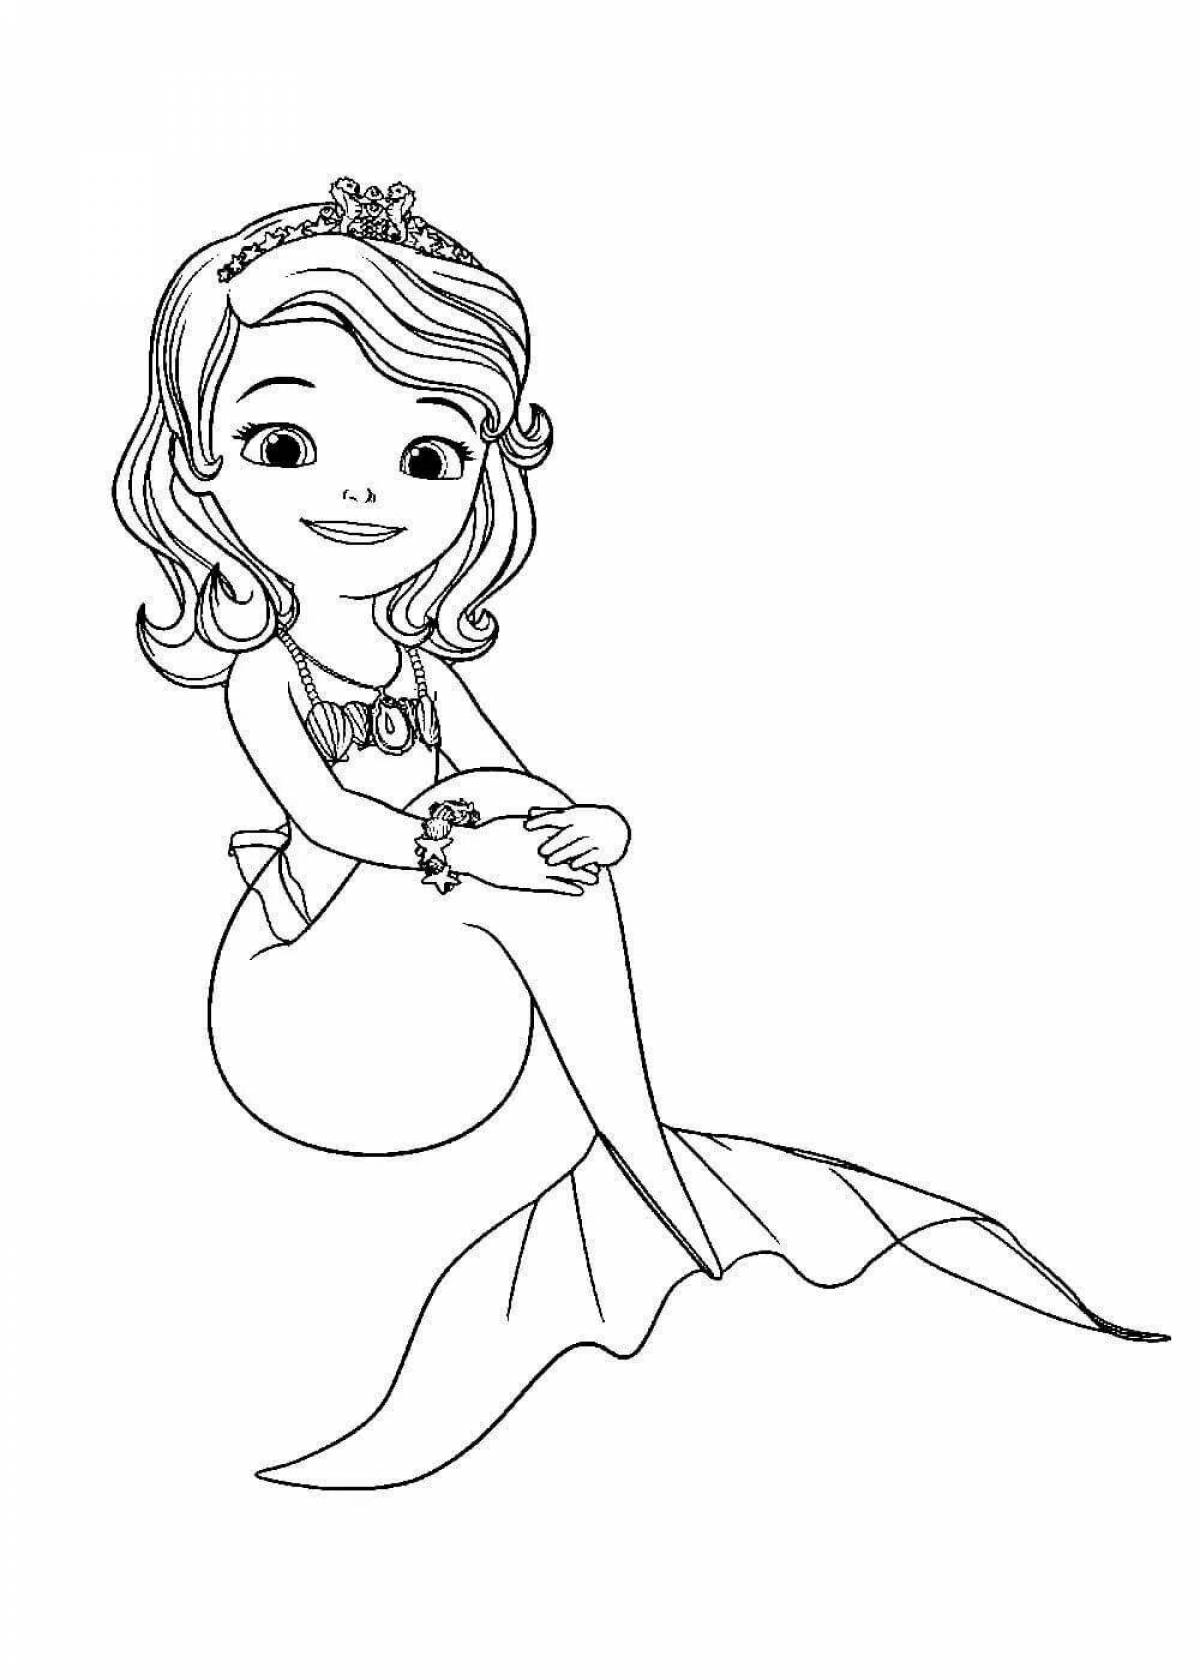 Princess Sofia the Little Mermaid mystical coloring book